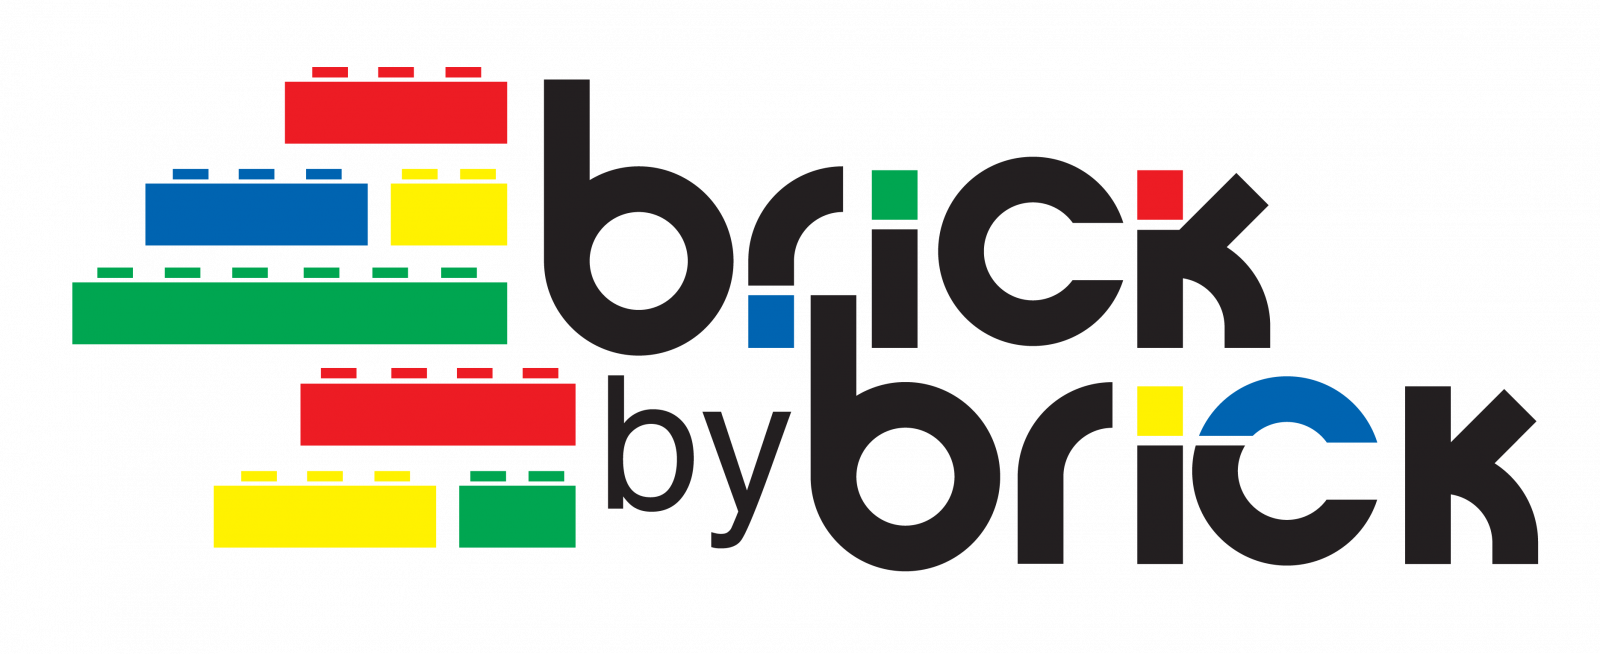 logo Brick by brick & BRICK cafe Liberec